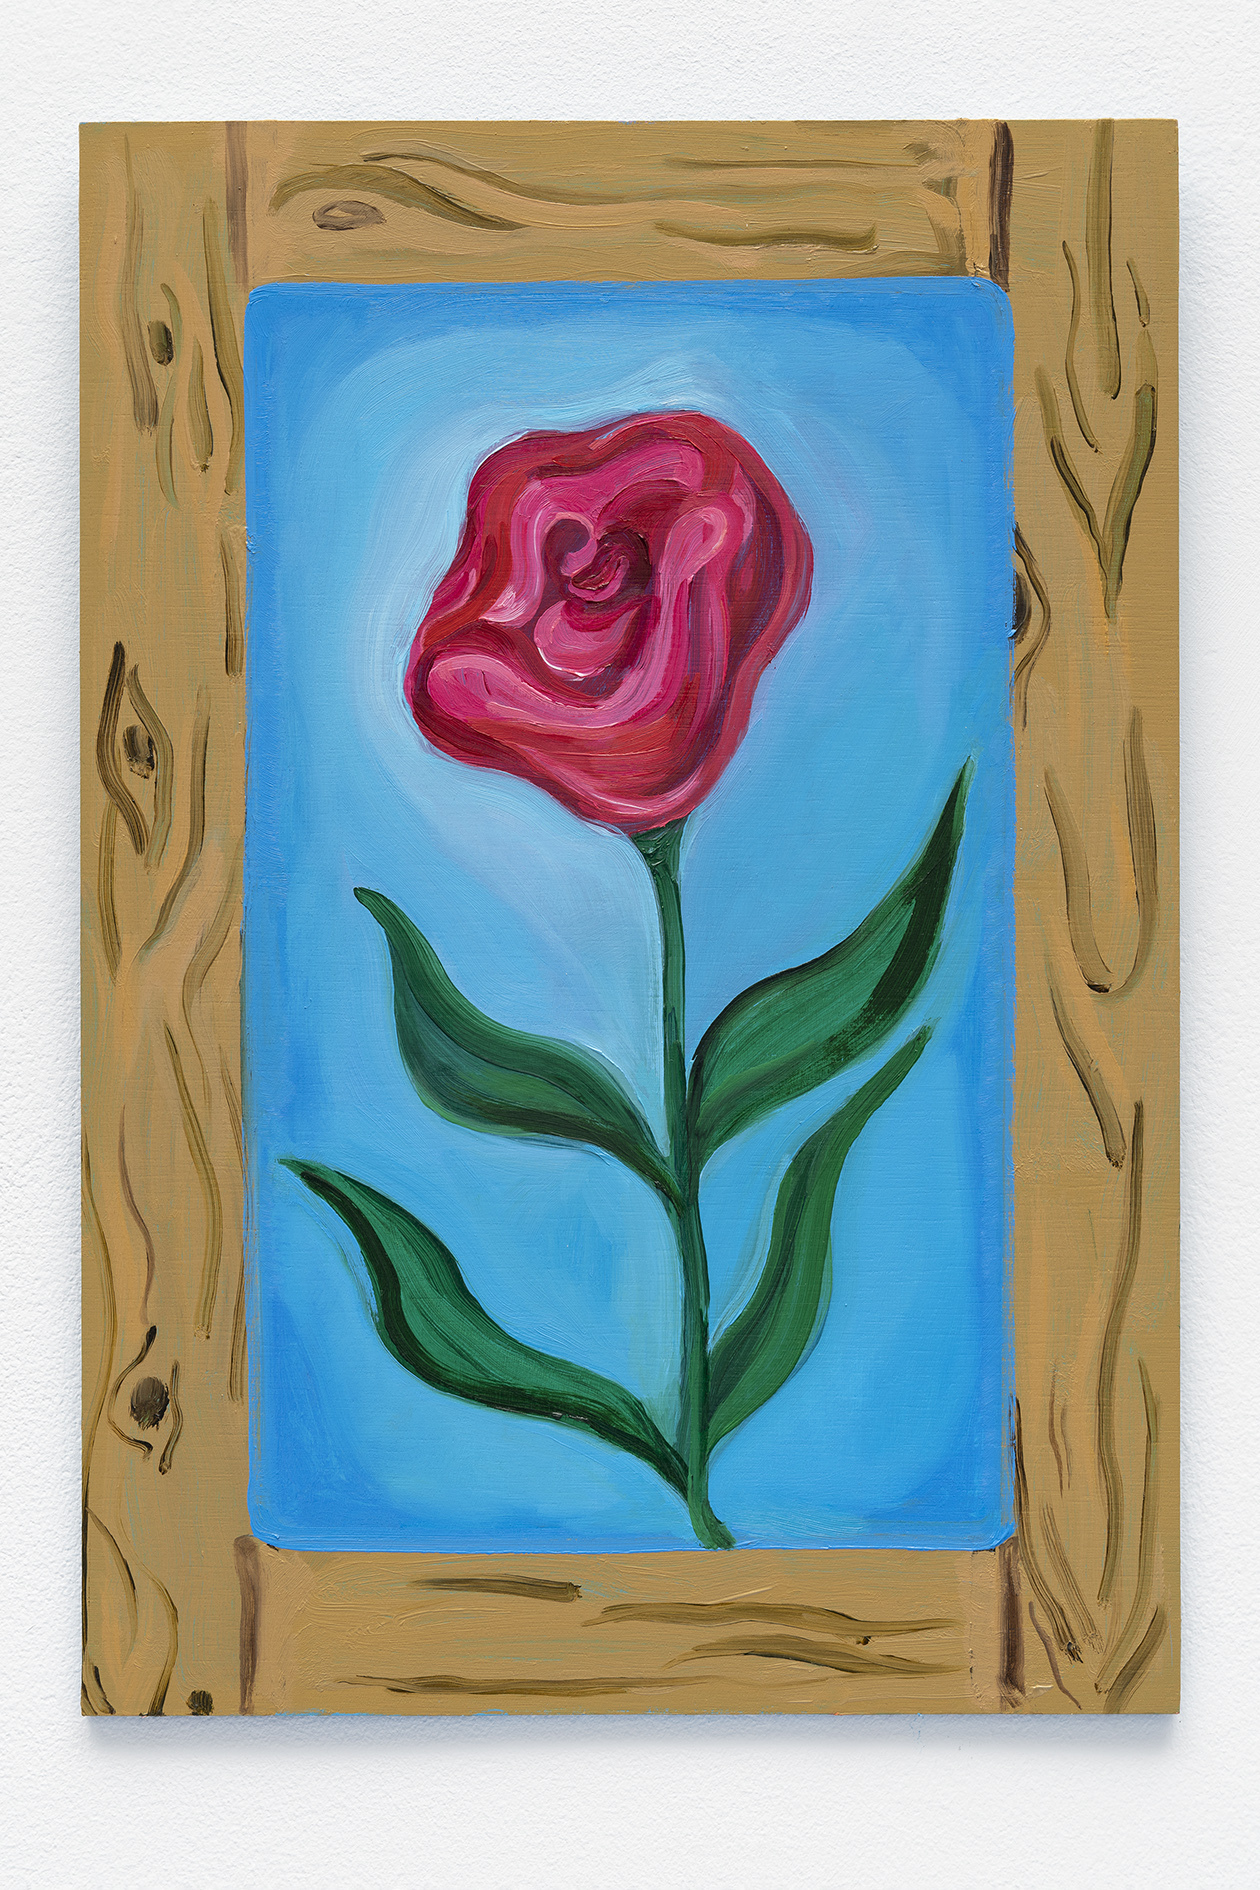 Olivia Parkes, Living Like the Rose, 2022 – Oil on wood, 70.5 x 43.5 x 0.5 cm